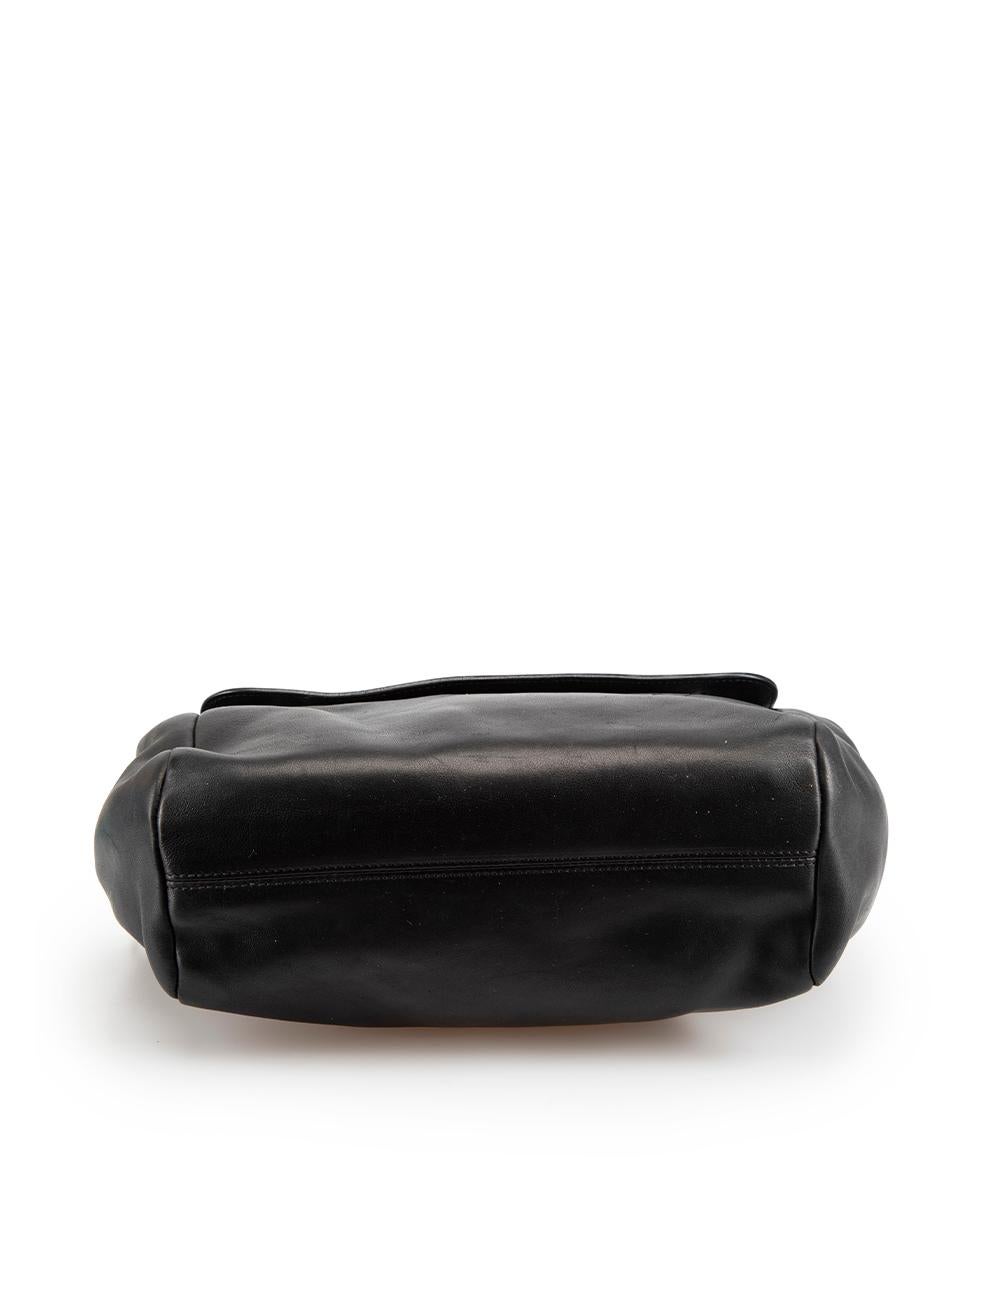 Women's Marni Black Leather Woven Top Handle Bag